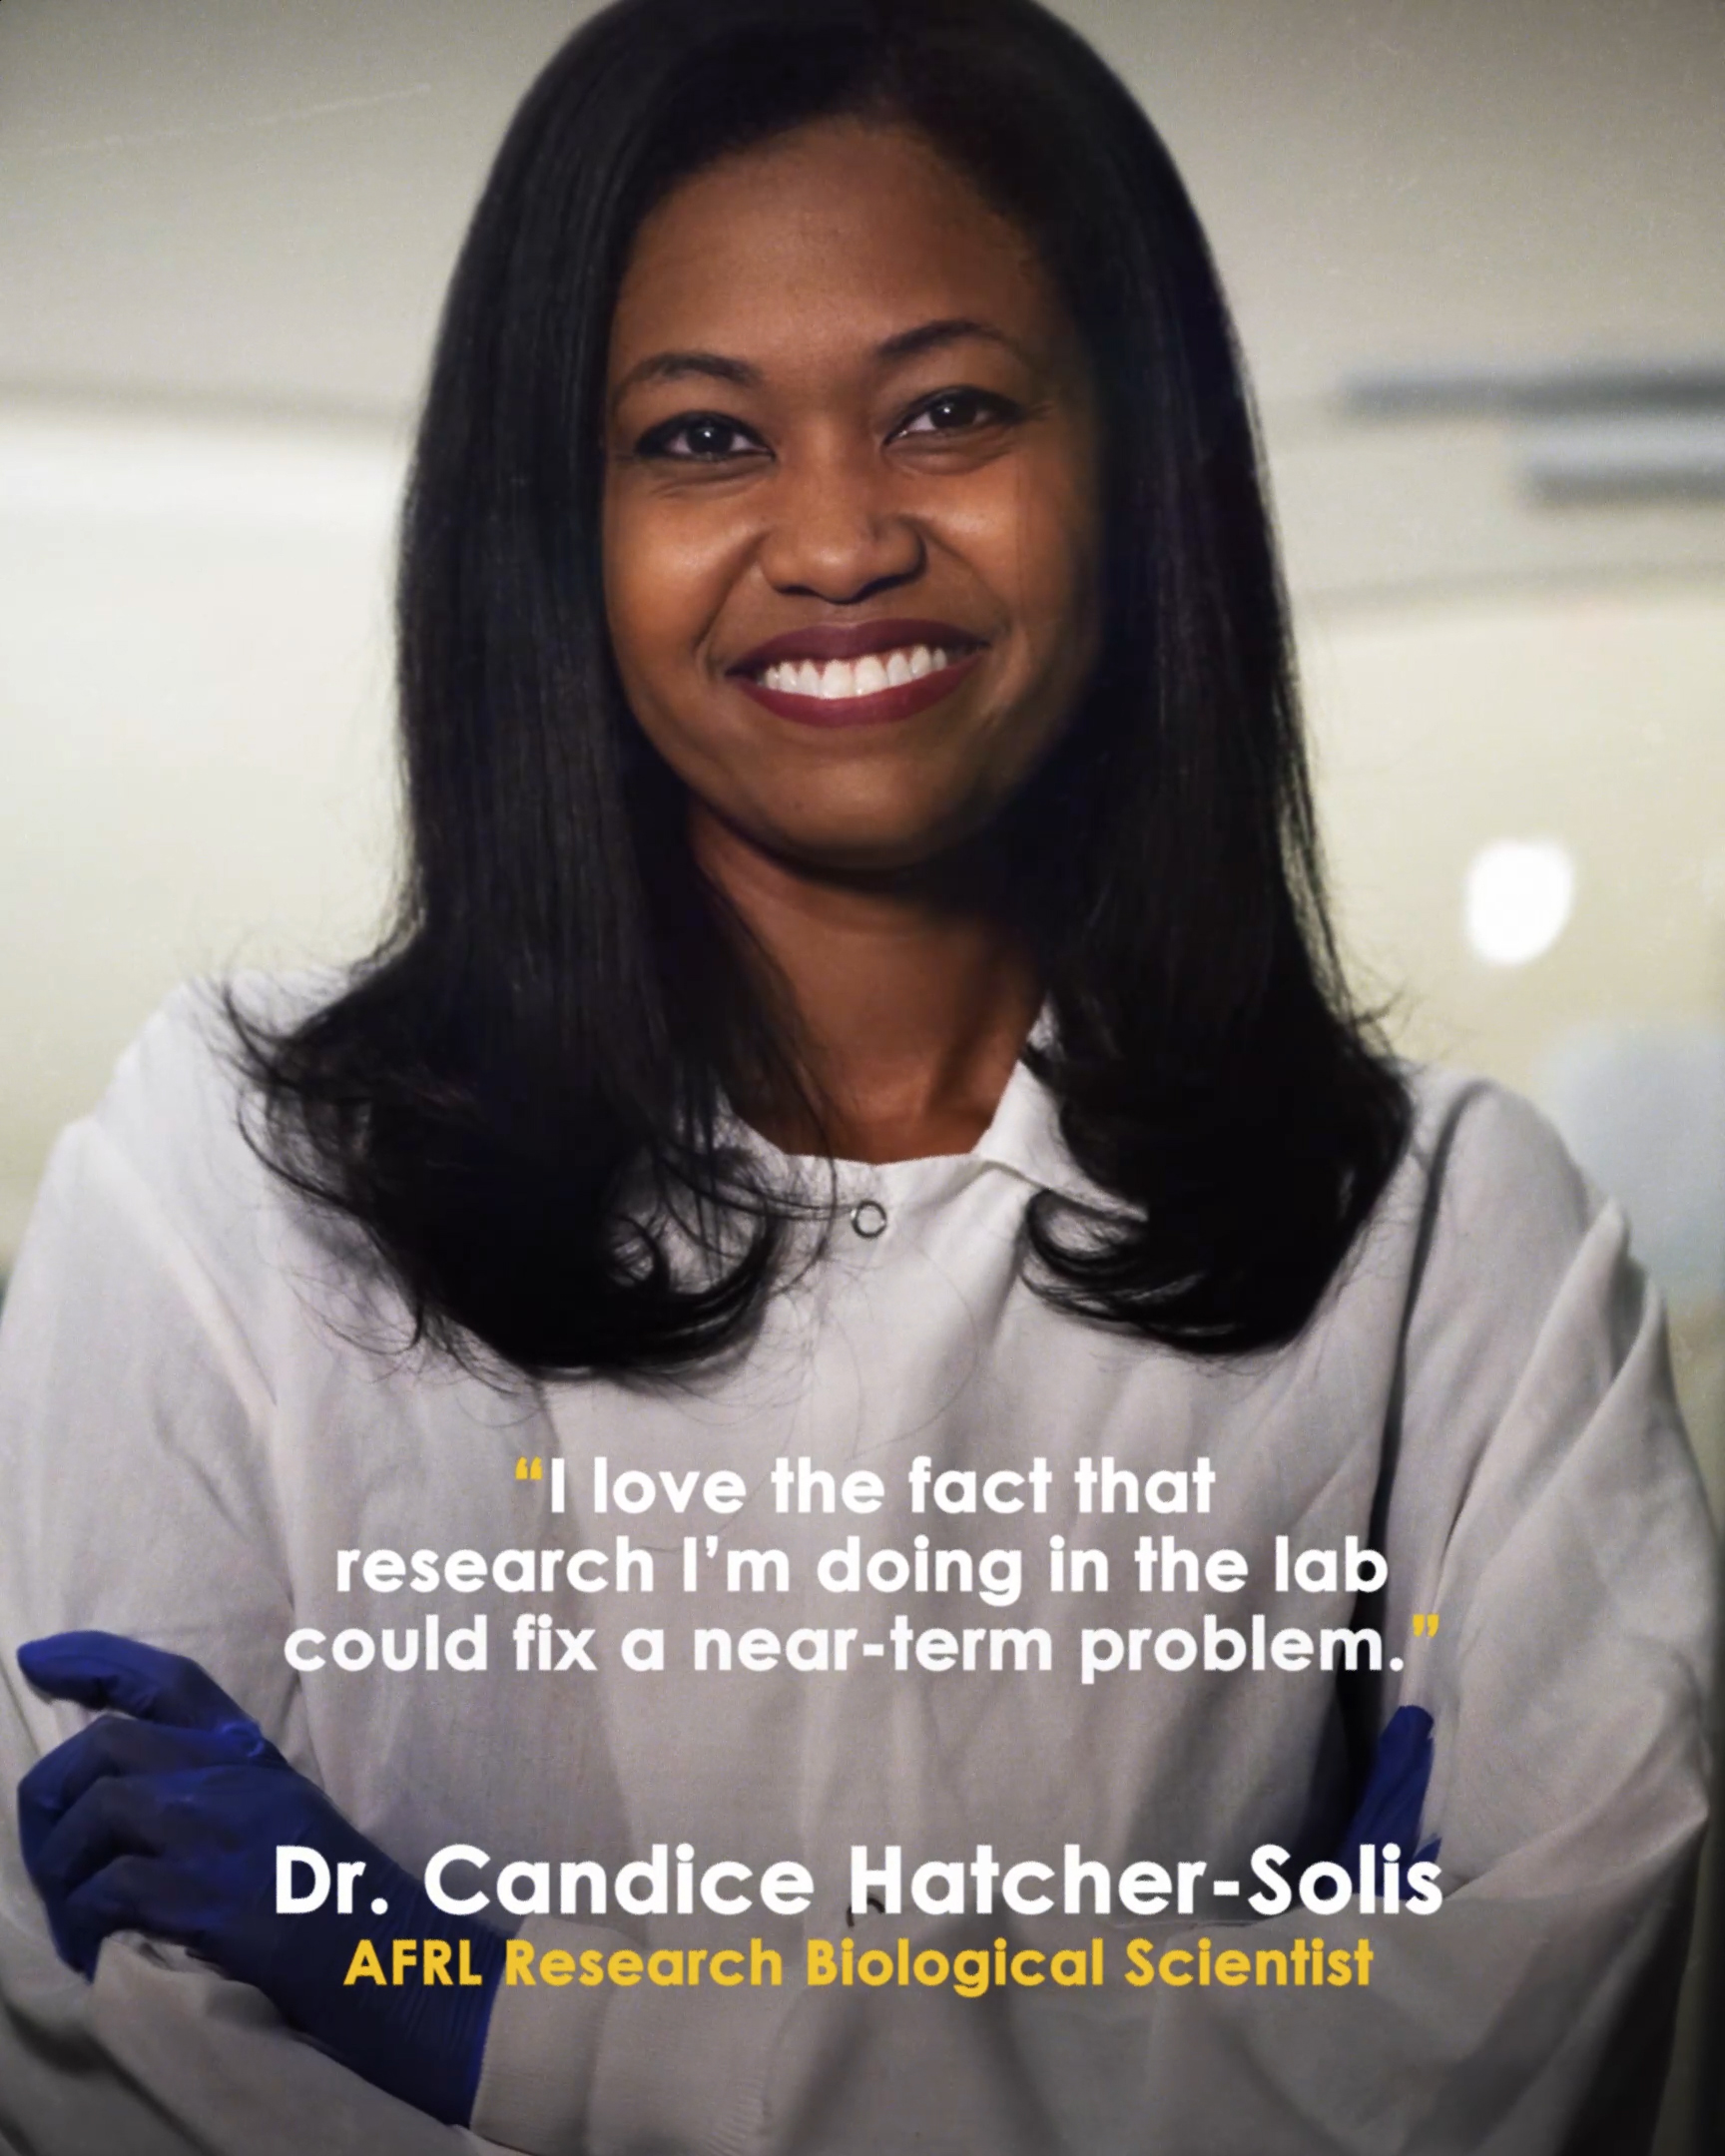 Dr. Candice Hatcher-Solis, AFRL Research Biological Scientist